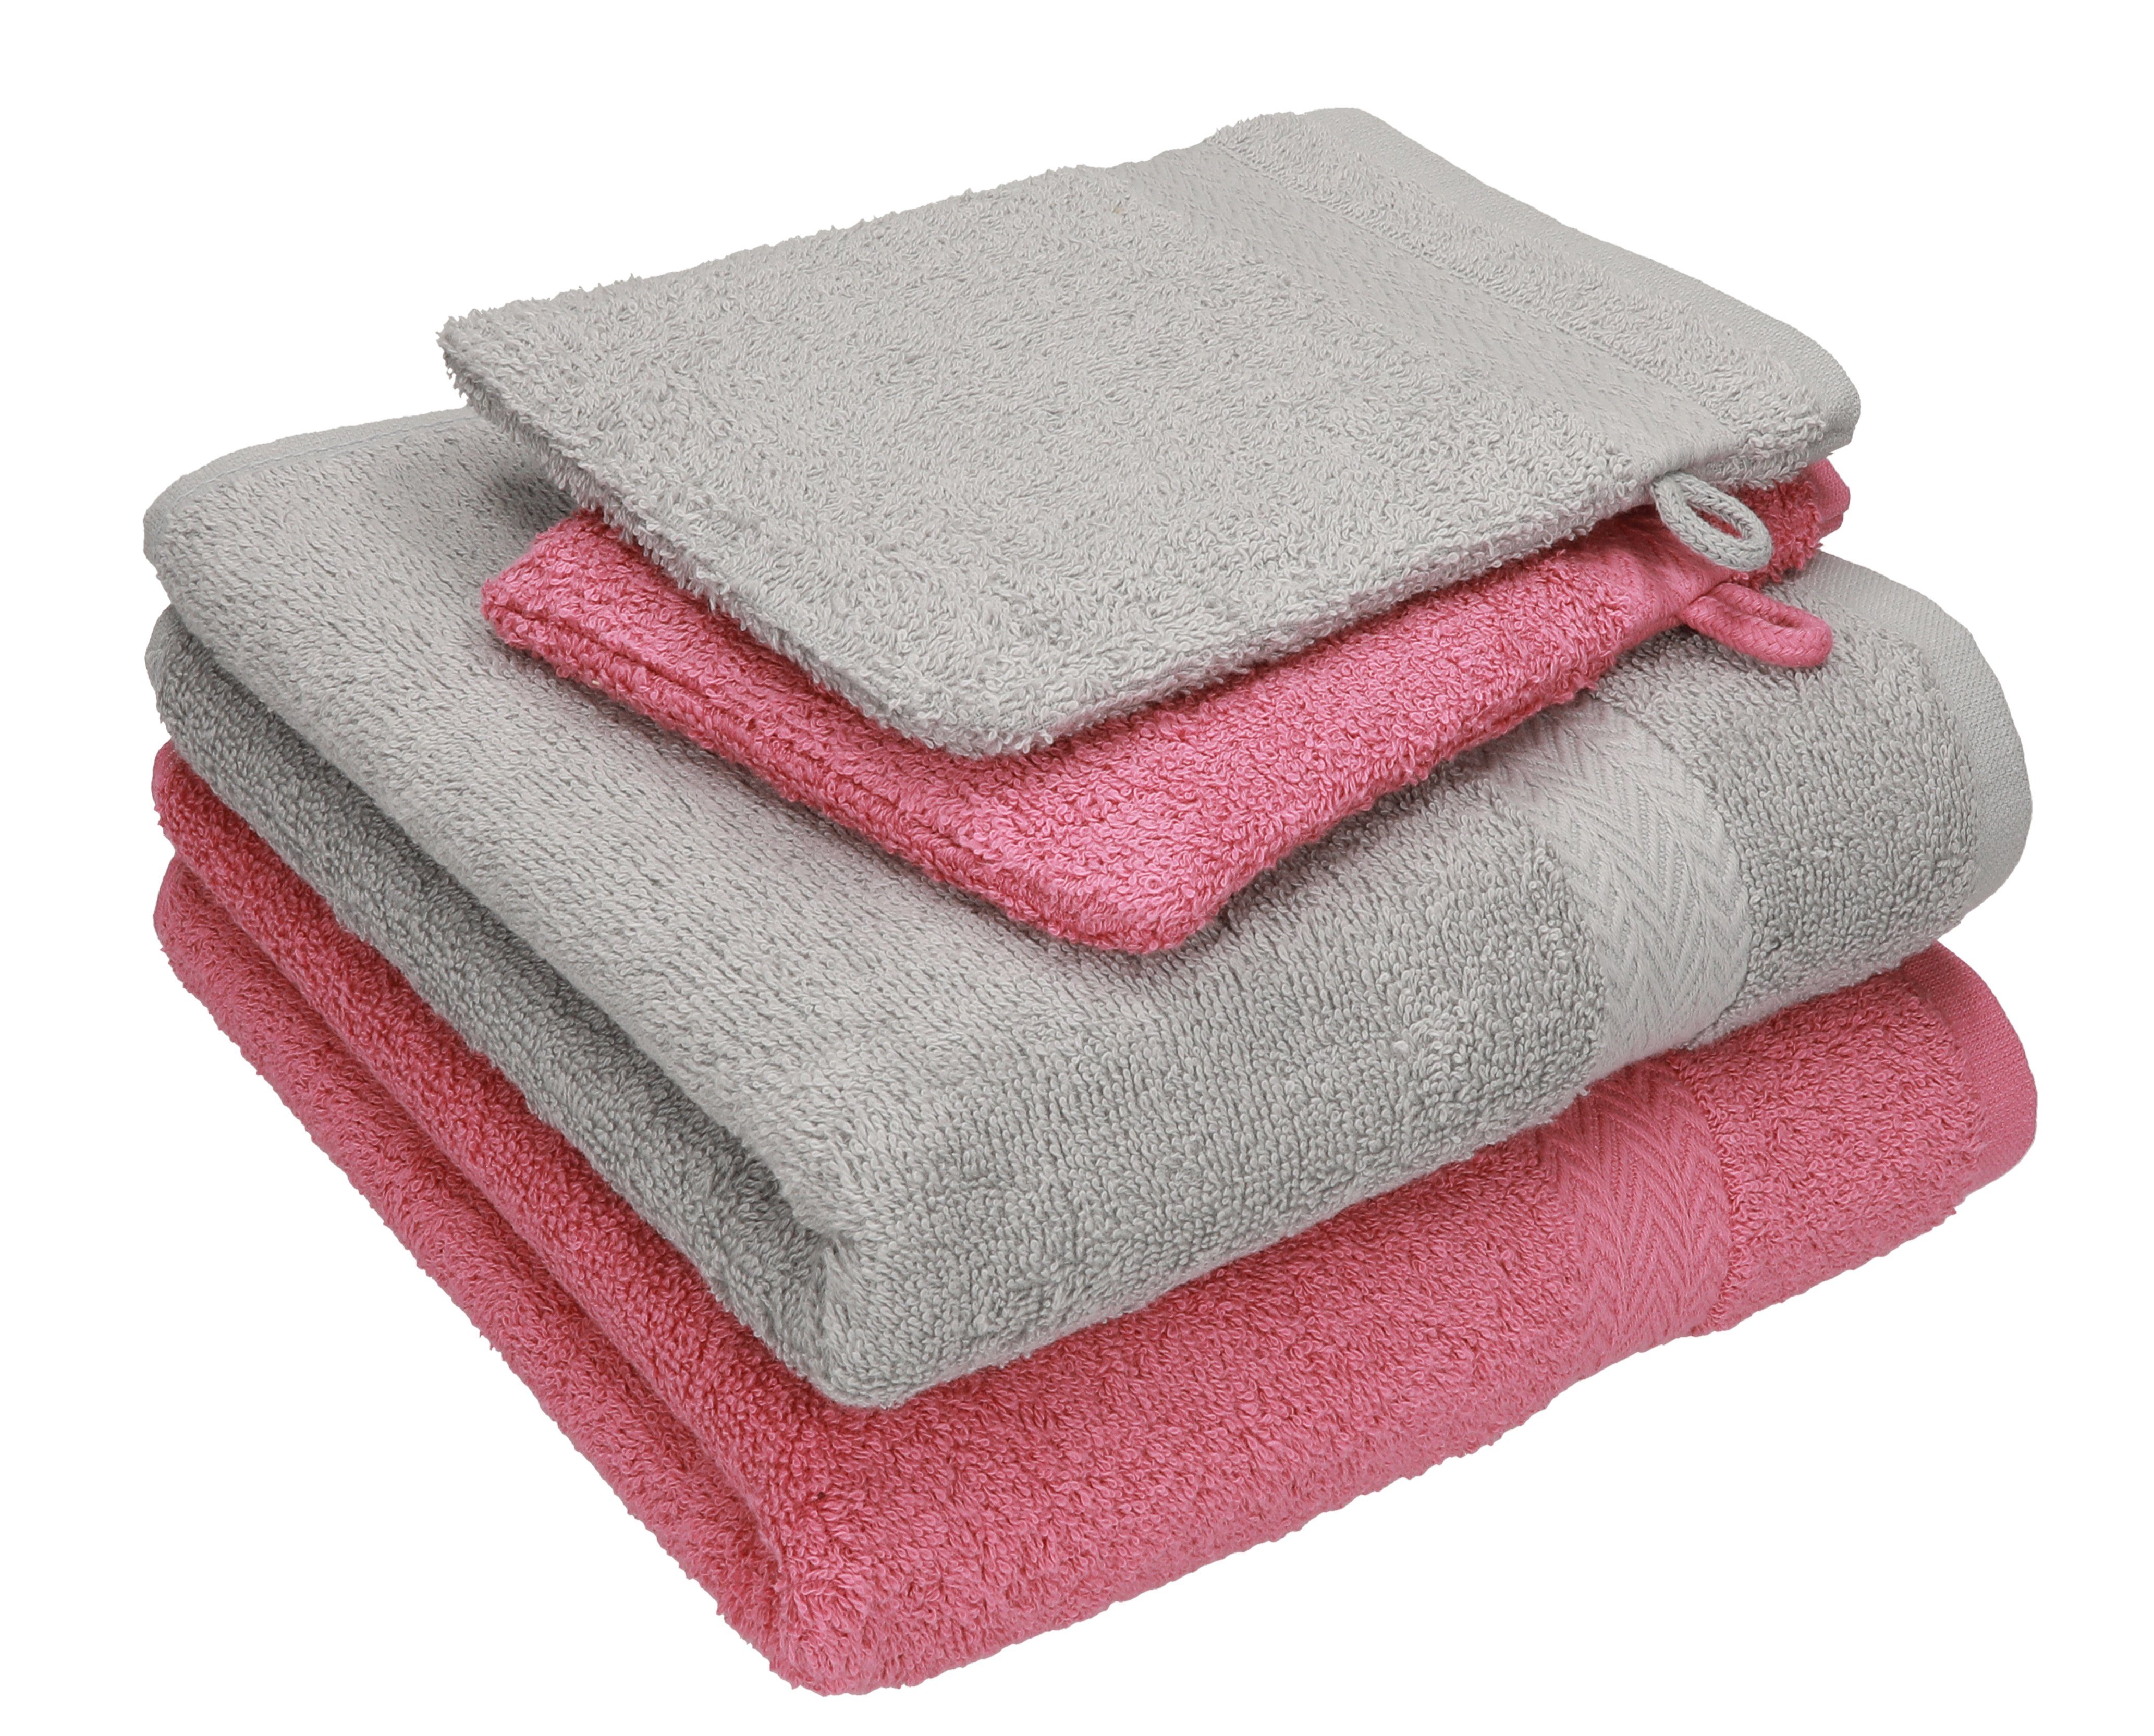 Betz Handtuch Set 4 TLG. Handtuch Set Happy Pack 100% Baumwolle 2 Handtücher 2 Waschhandschuhe, 100% Baumwolle silbergrau-altrosa